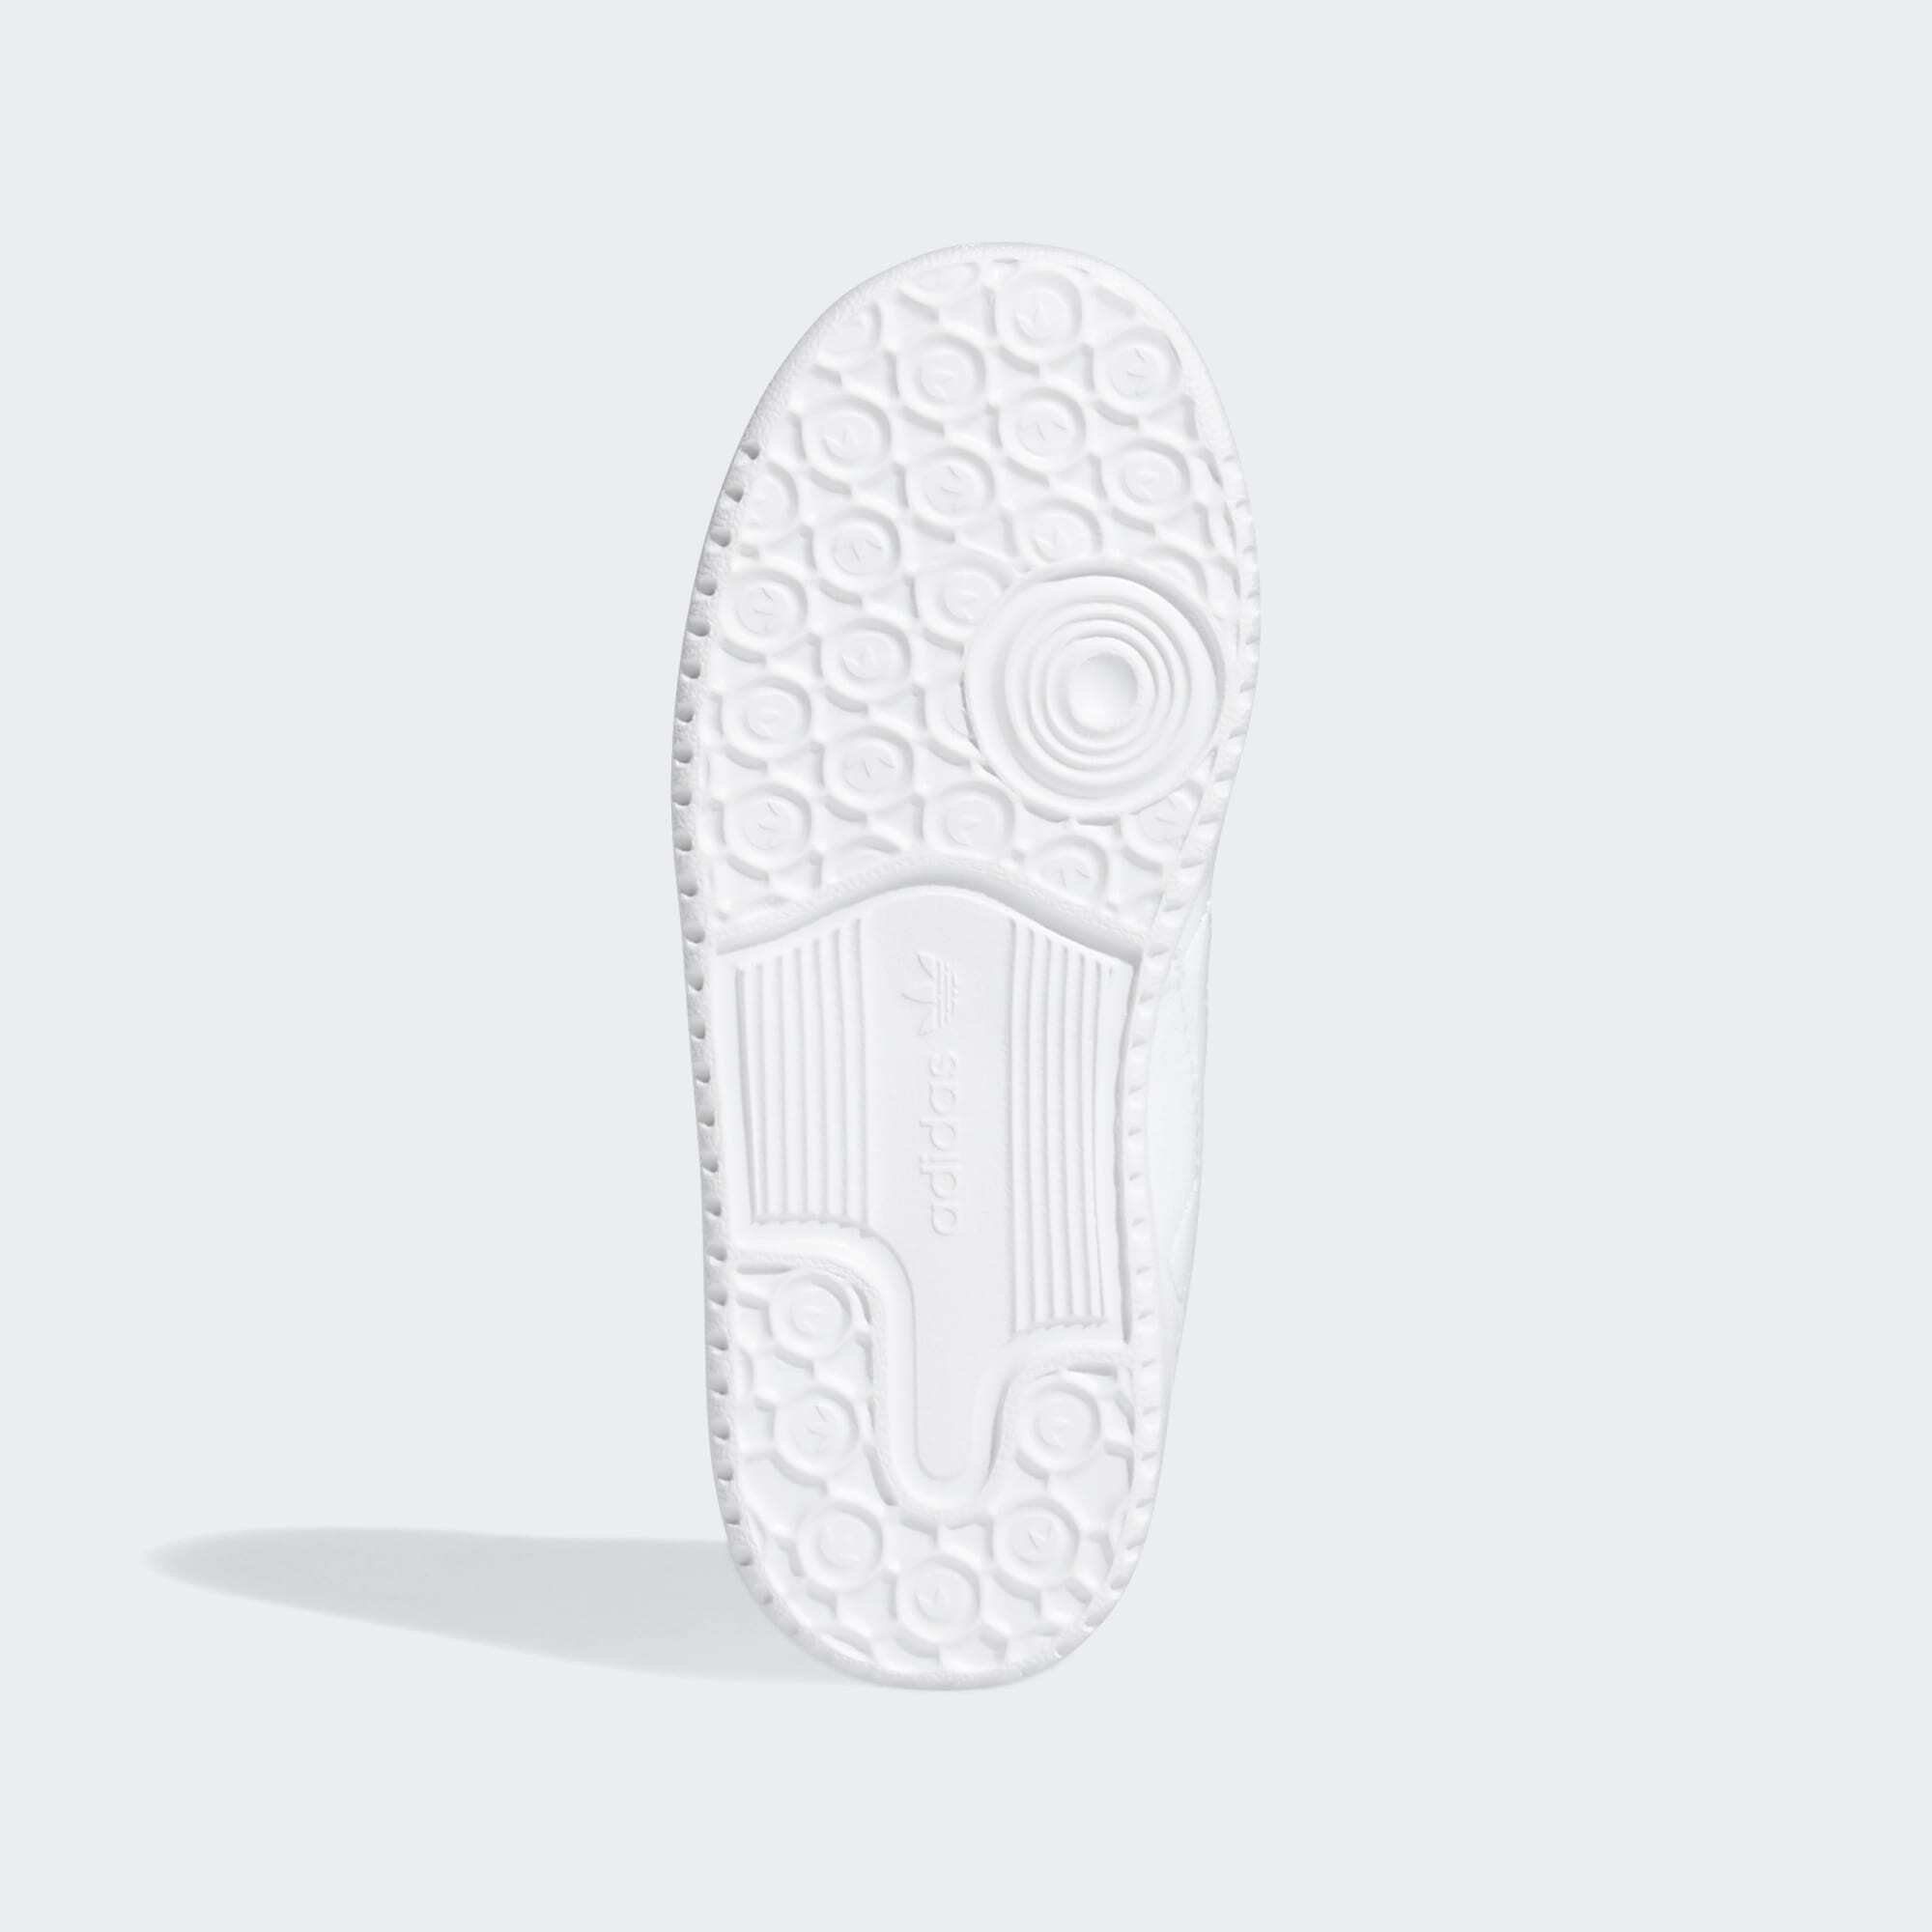 adidas Originals FORUM White White White LOW Cloud Cloud Cloud Sneaker SCHUH / 